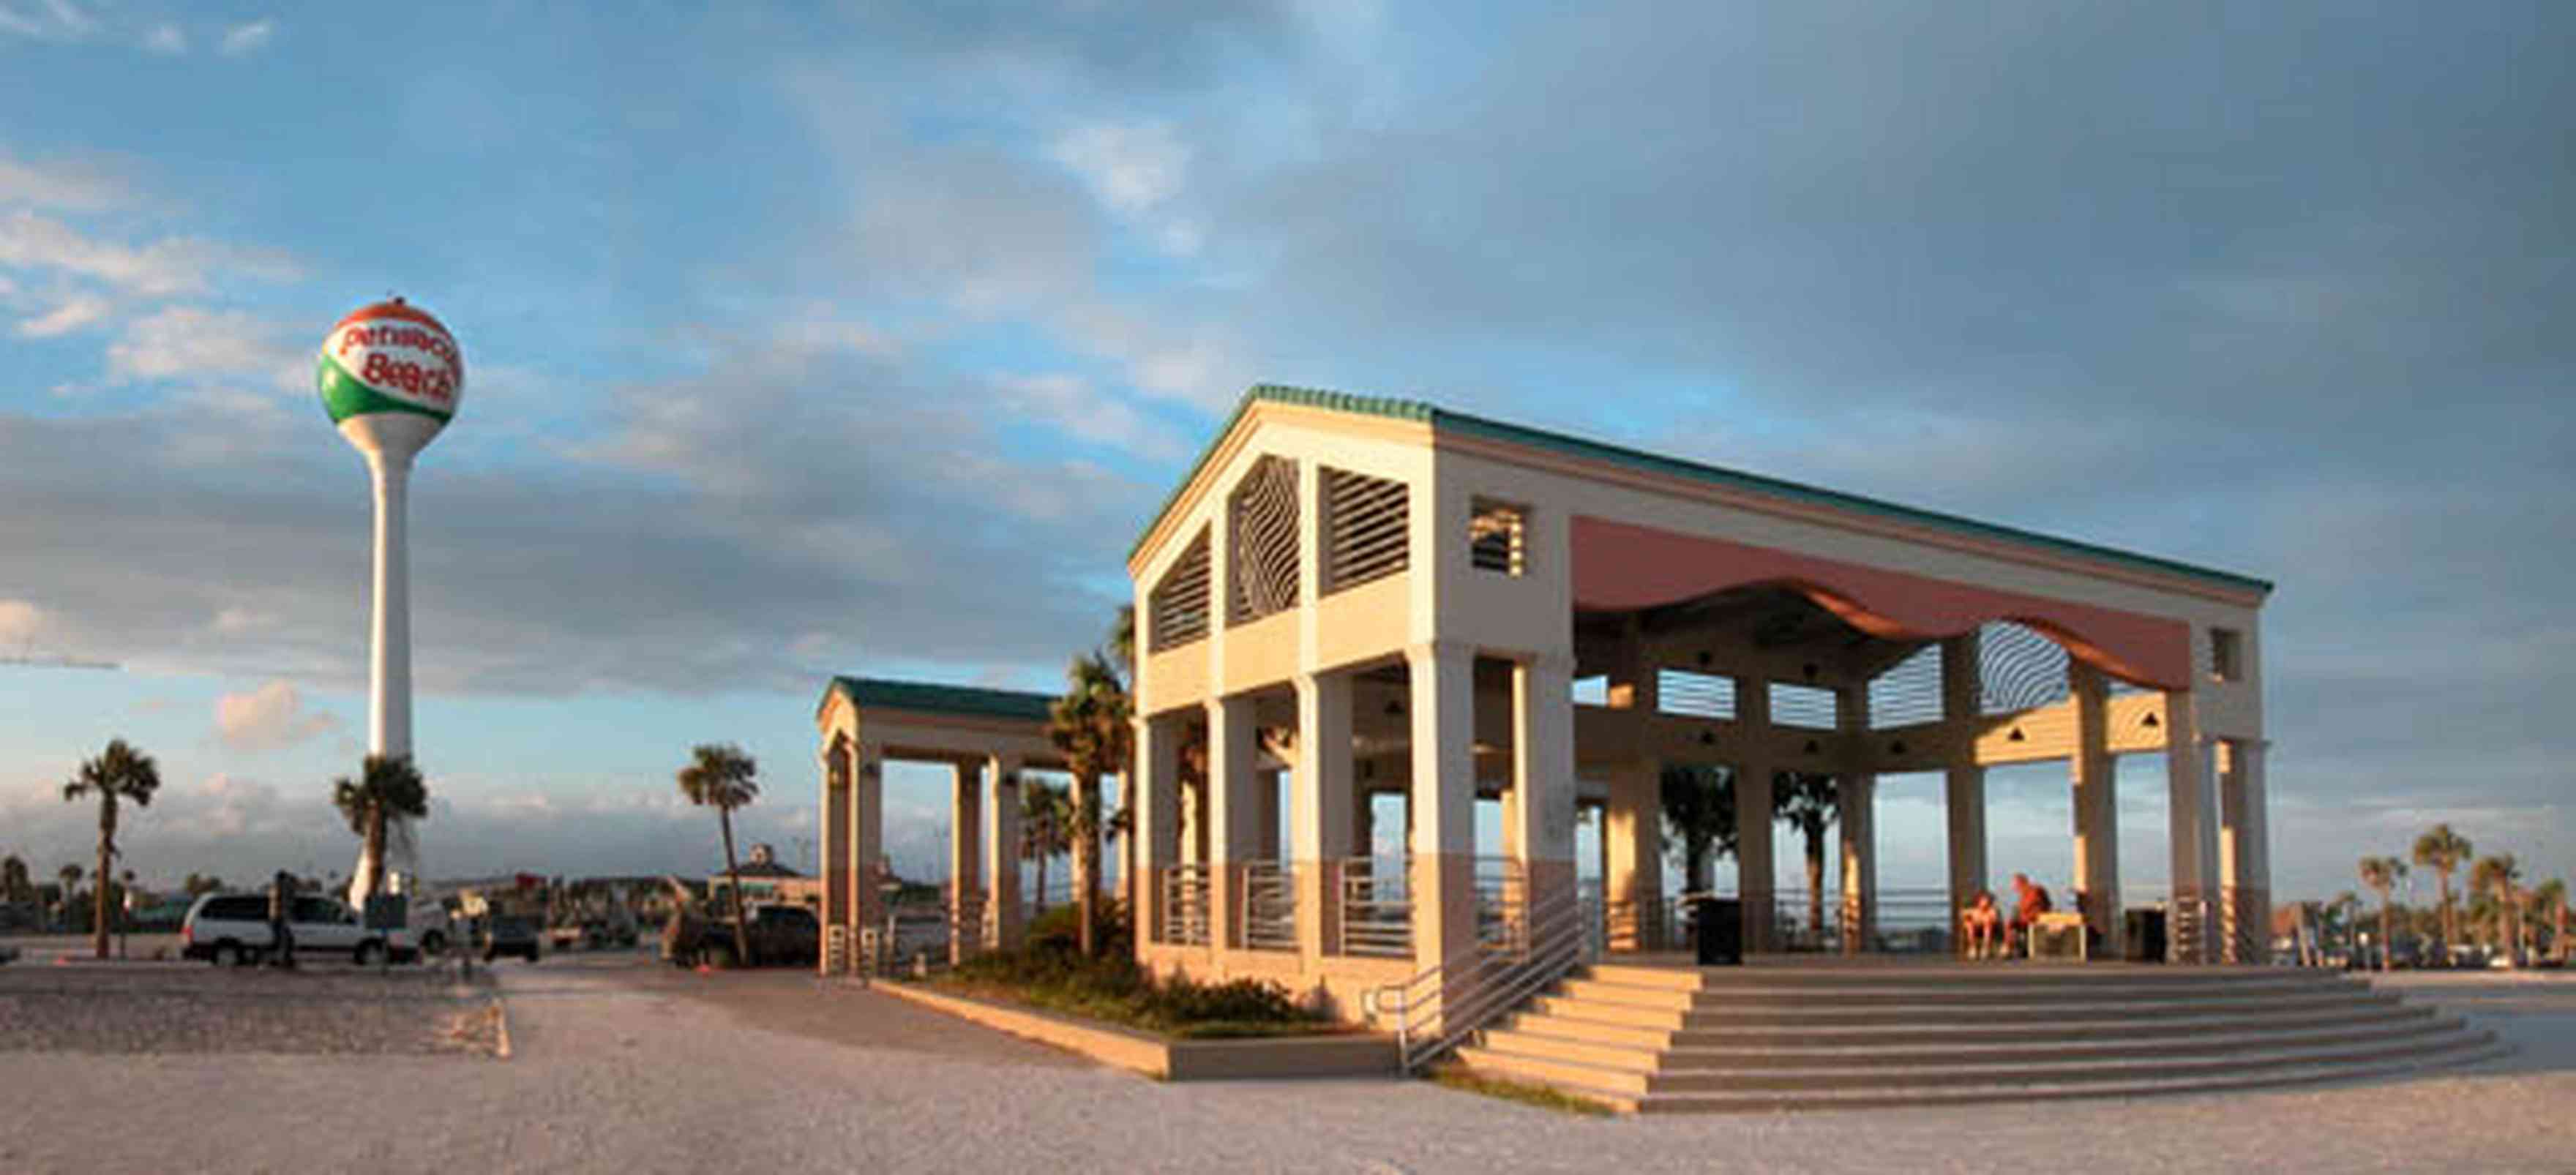 Pensacola-Beach:-Casino-Beach-Pavillion_01.jpg:  open-air pavillion, gathering place, temple, shelter, columns, steps, beach ball, water tower, palm trees, beachfront, sand